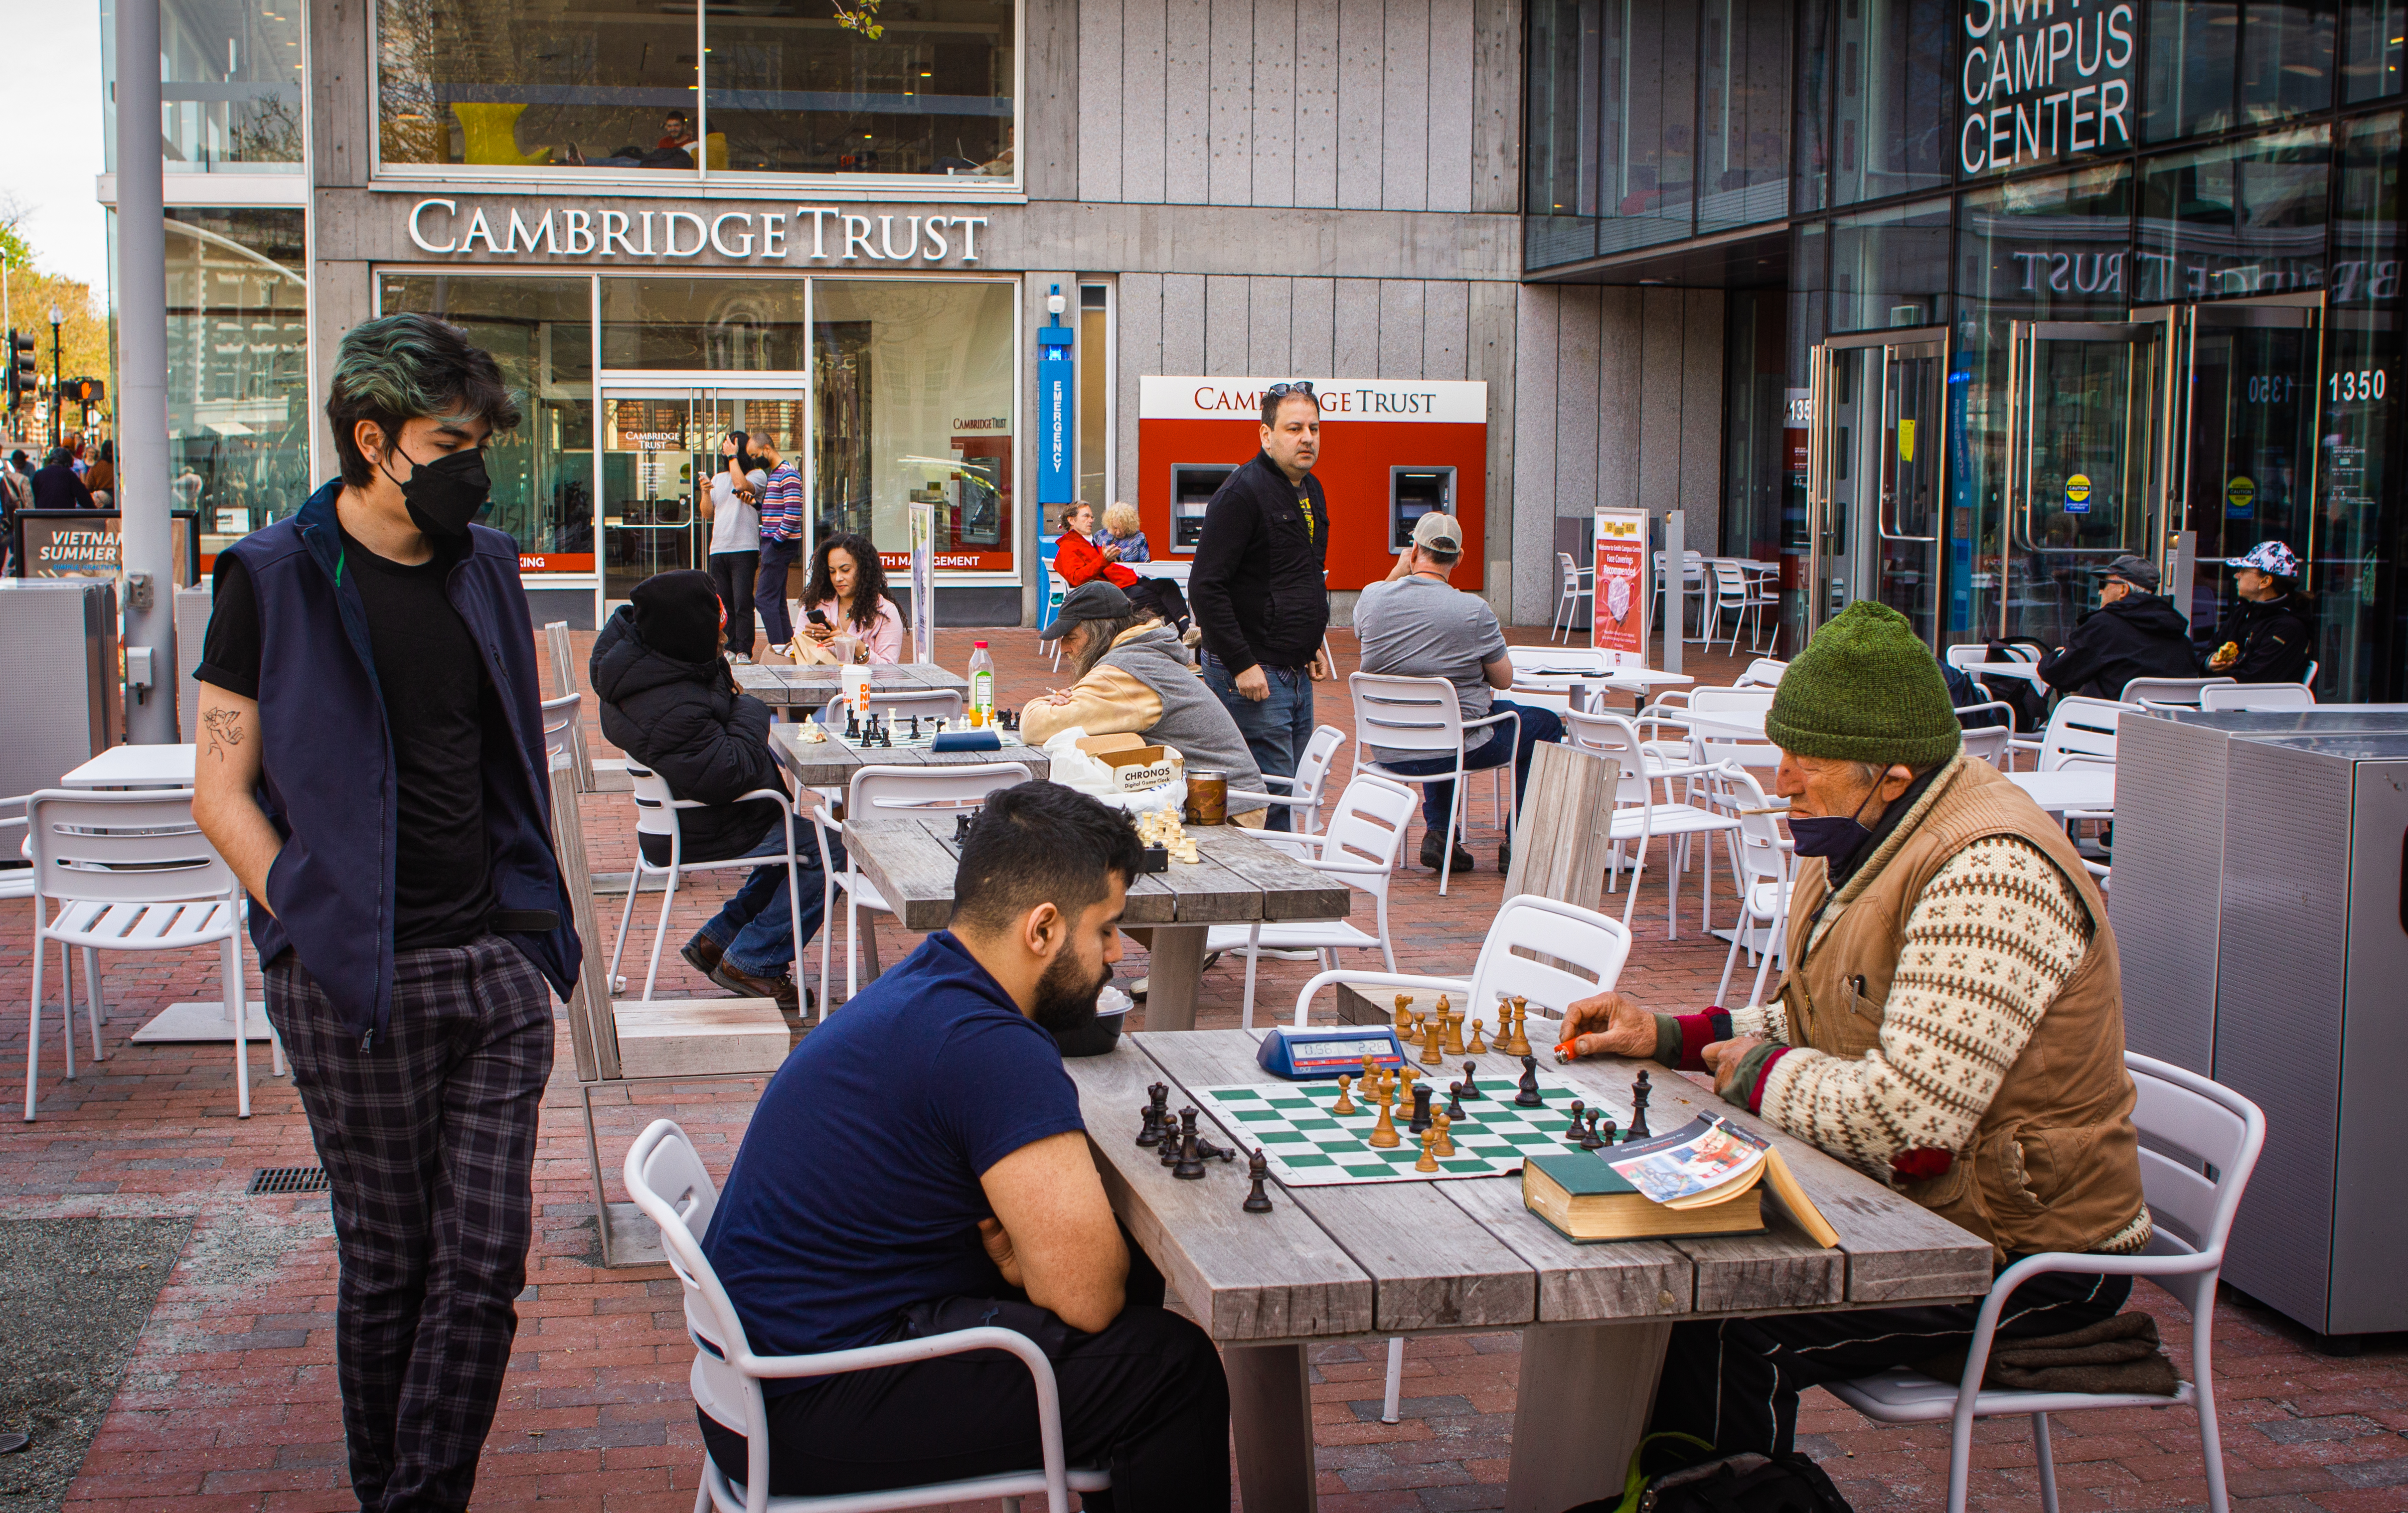 NYC park chess players still making moves despite coronavirus